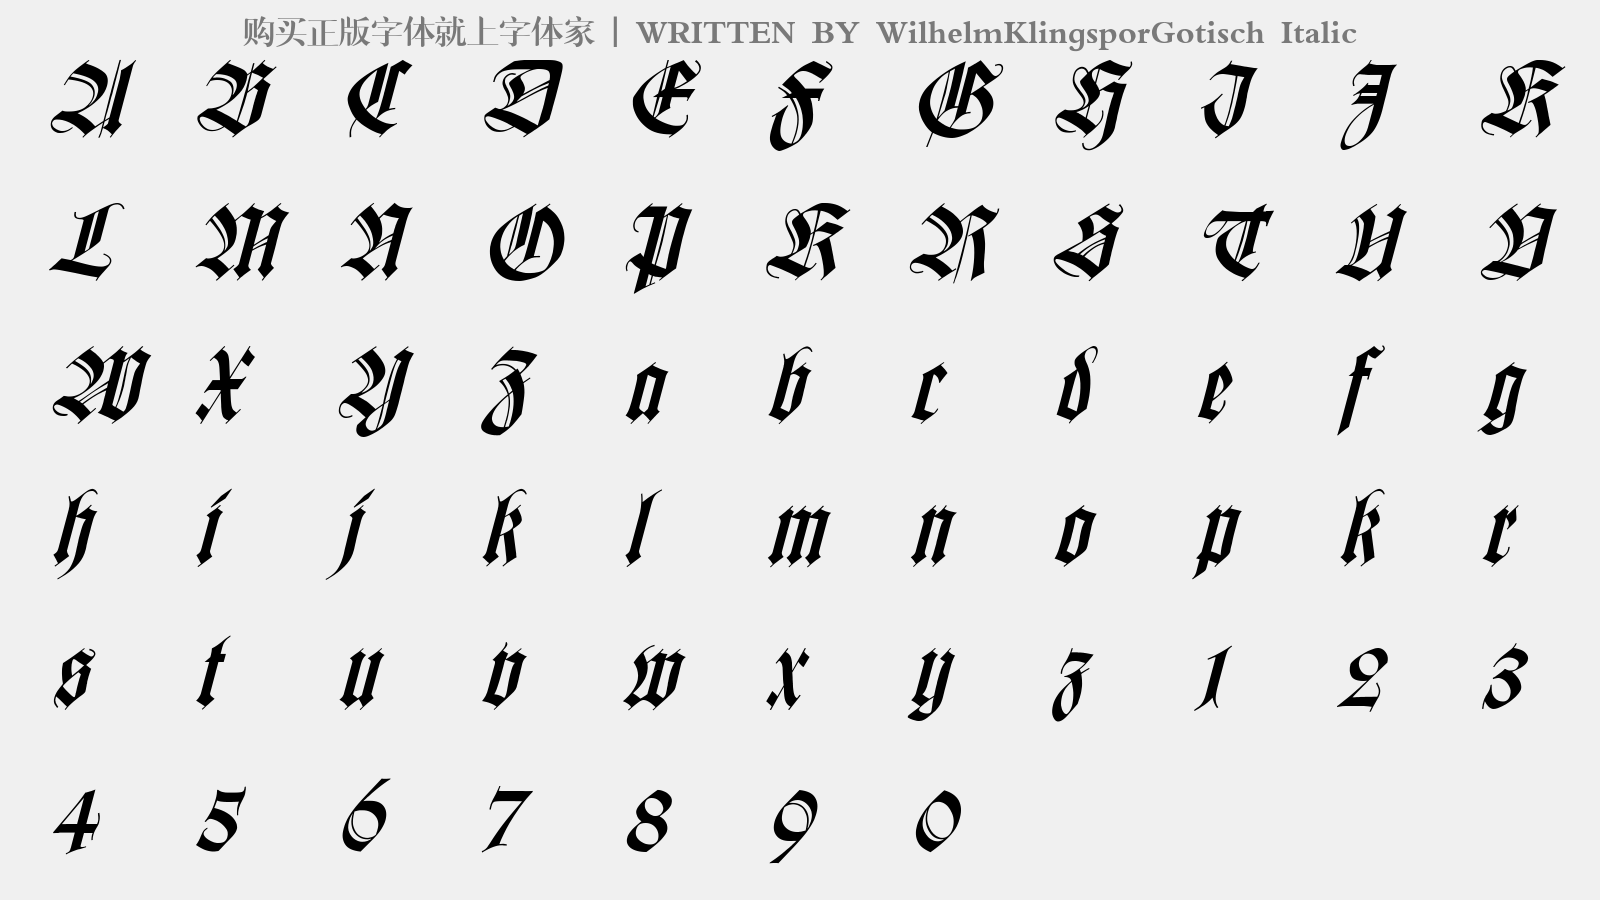 WilhelmKlingsporGotisch Italic - 大写字母/小写字母/数字